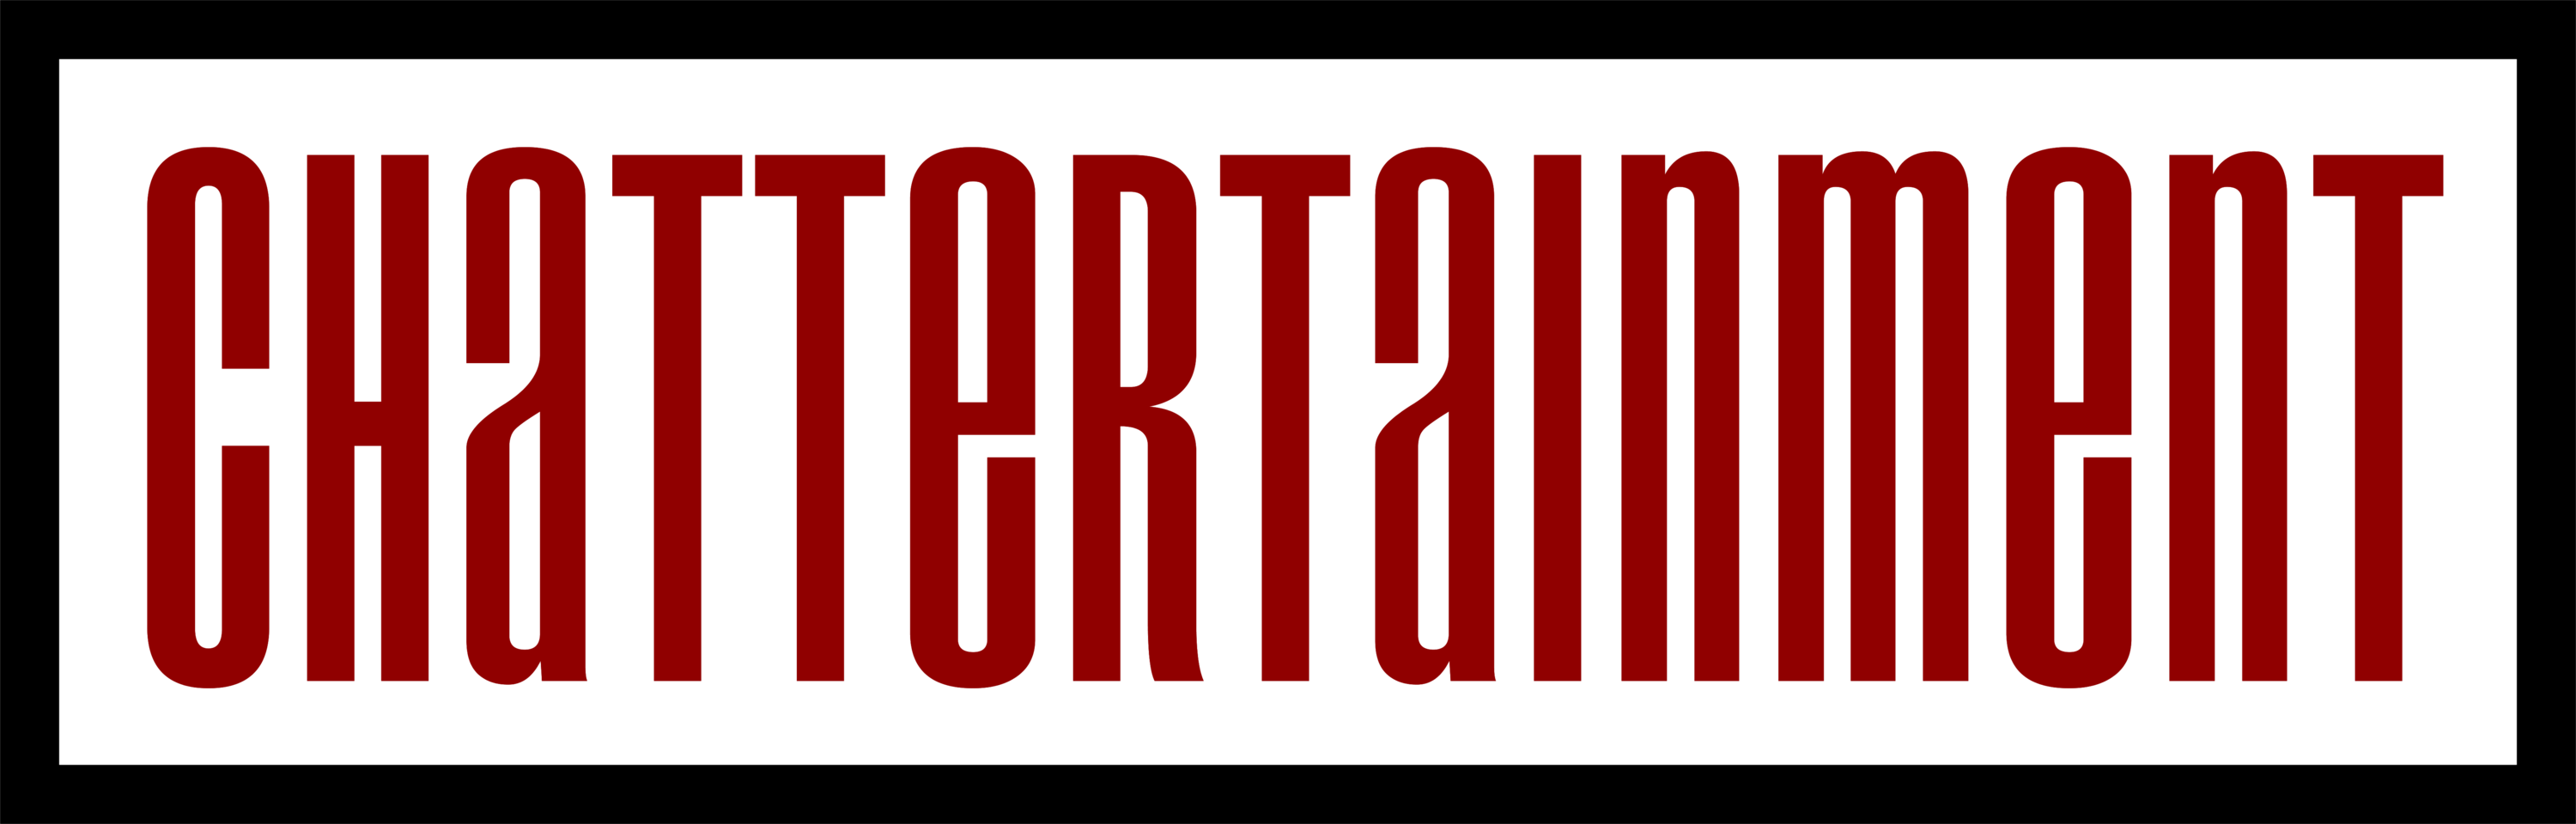 Chattertainment Logo